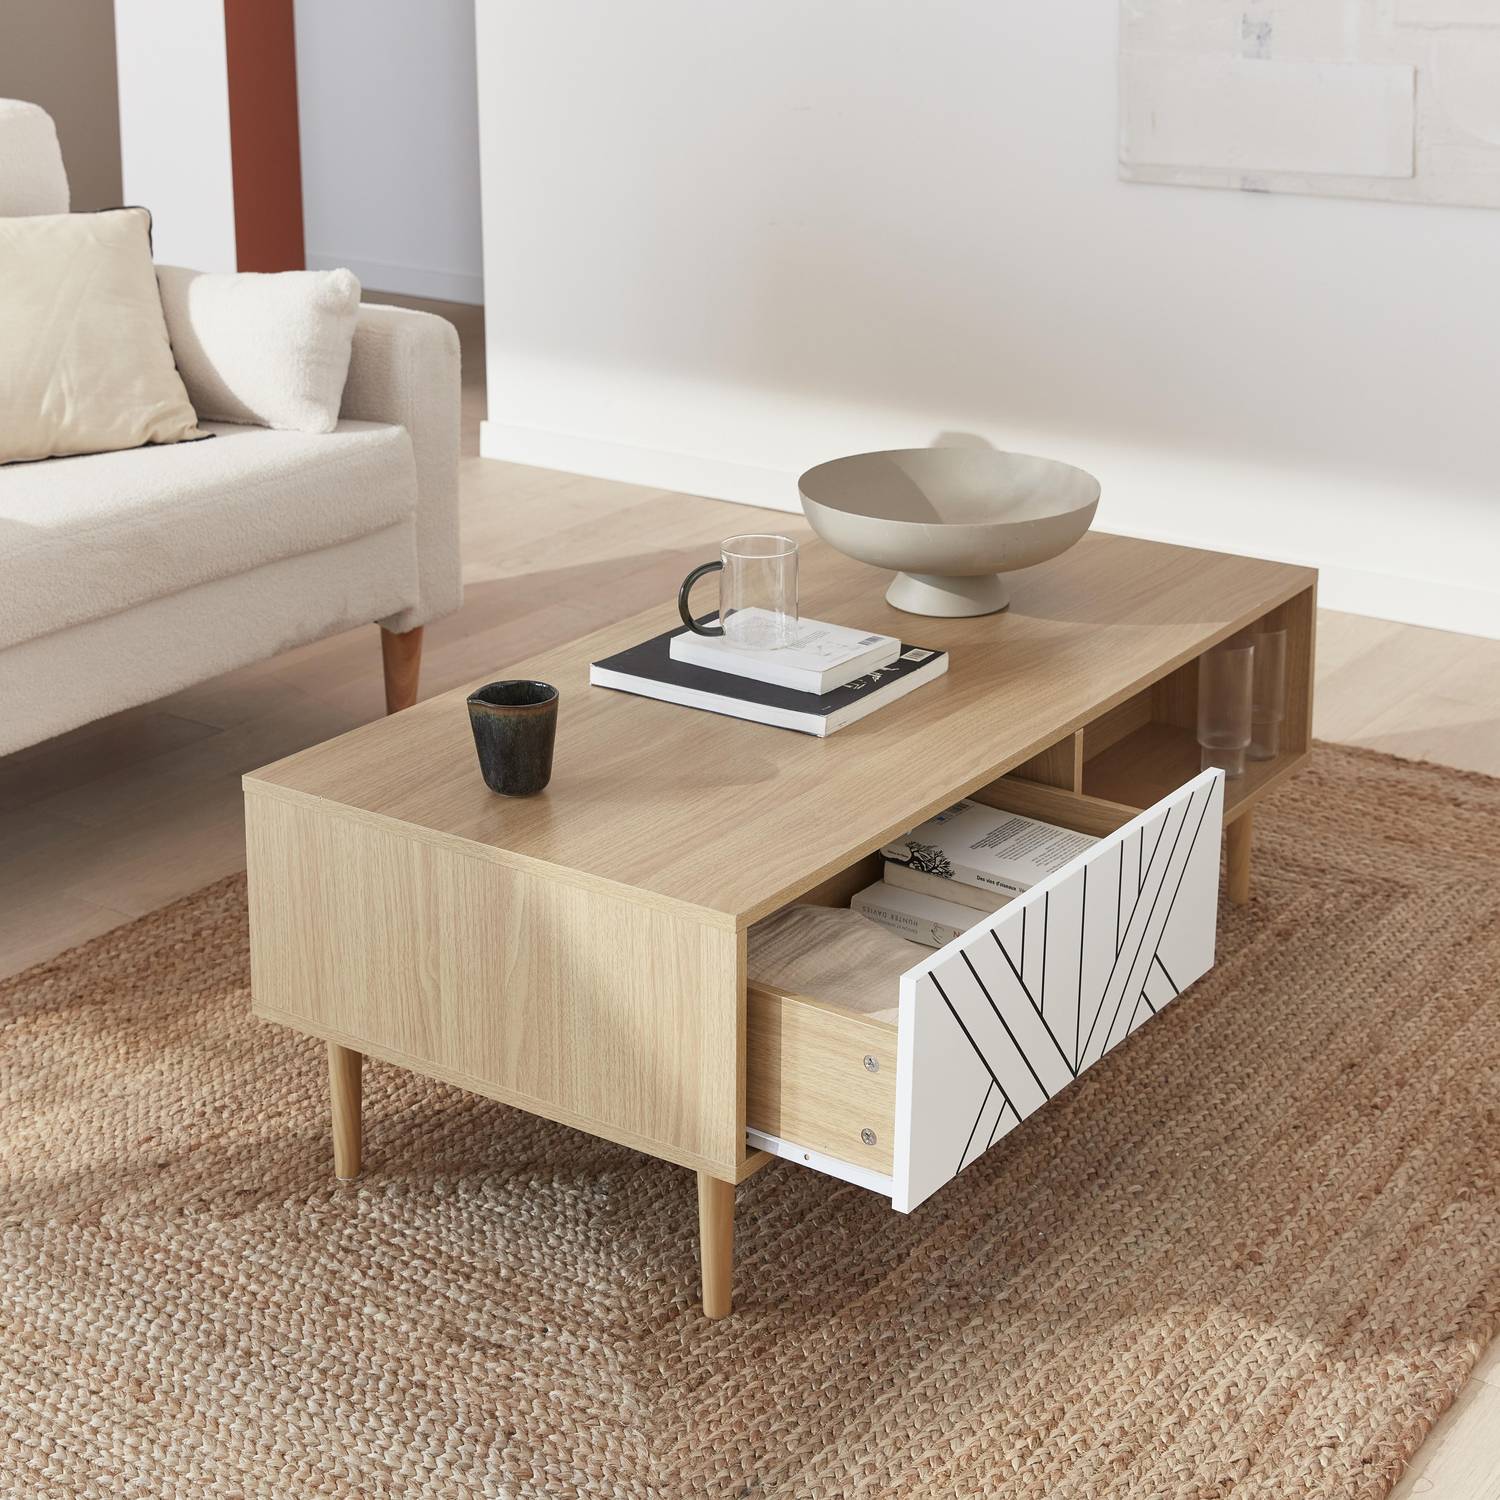 Wood-effect coffee table, 120x55x40cm, Mika, White Photo2